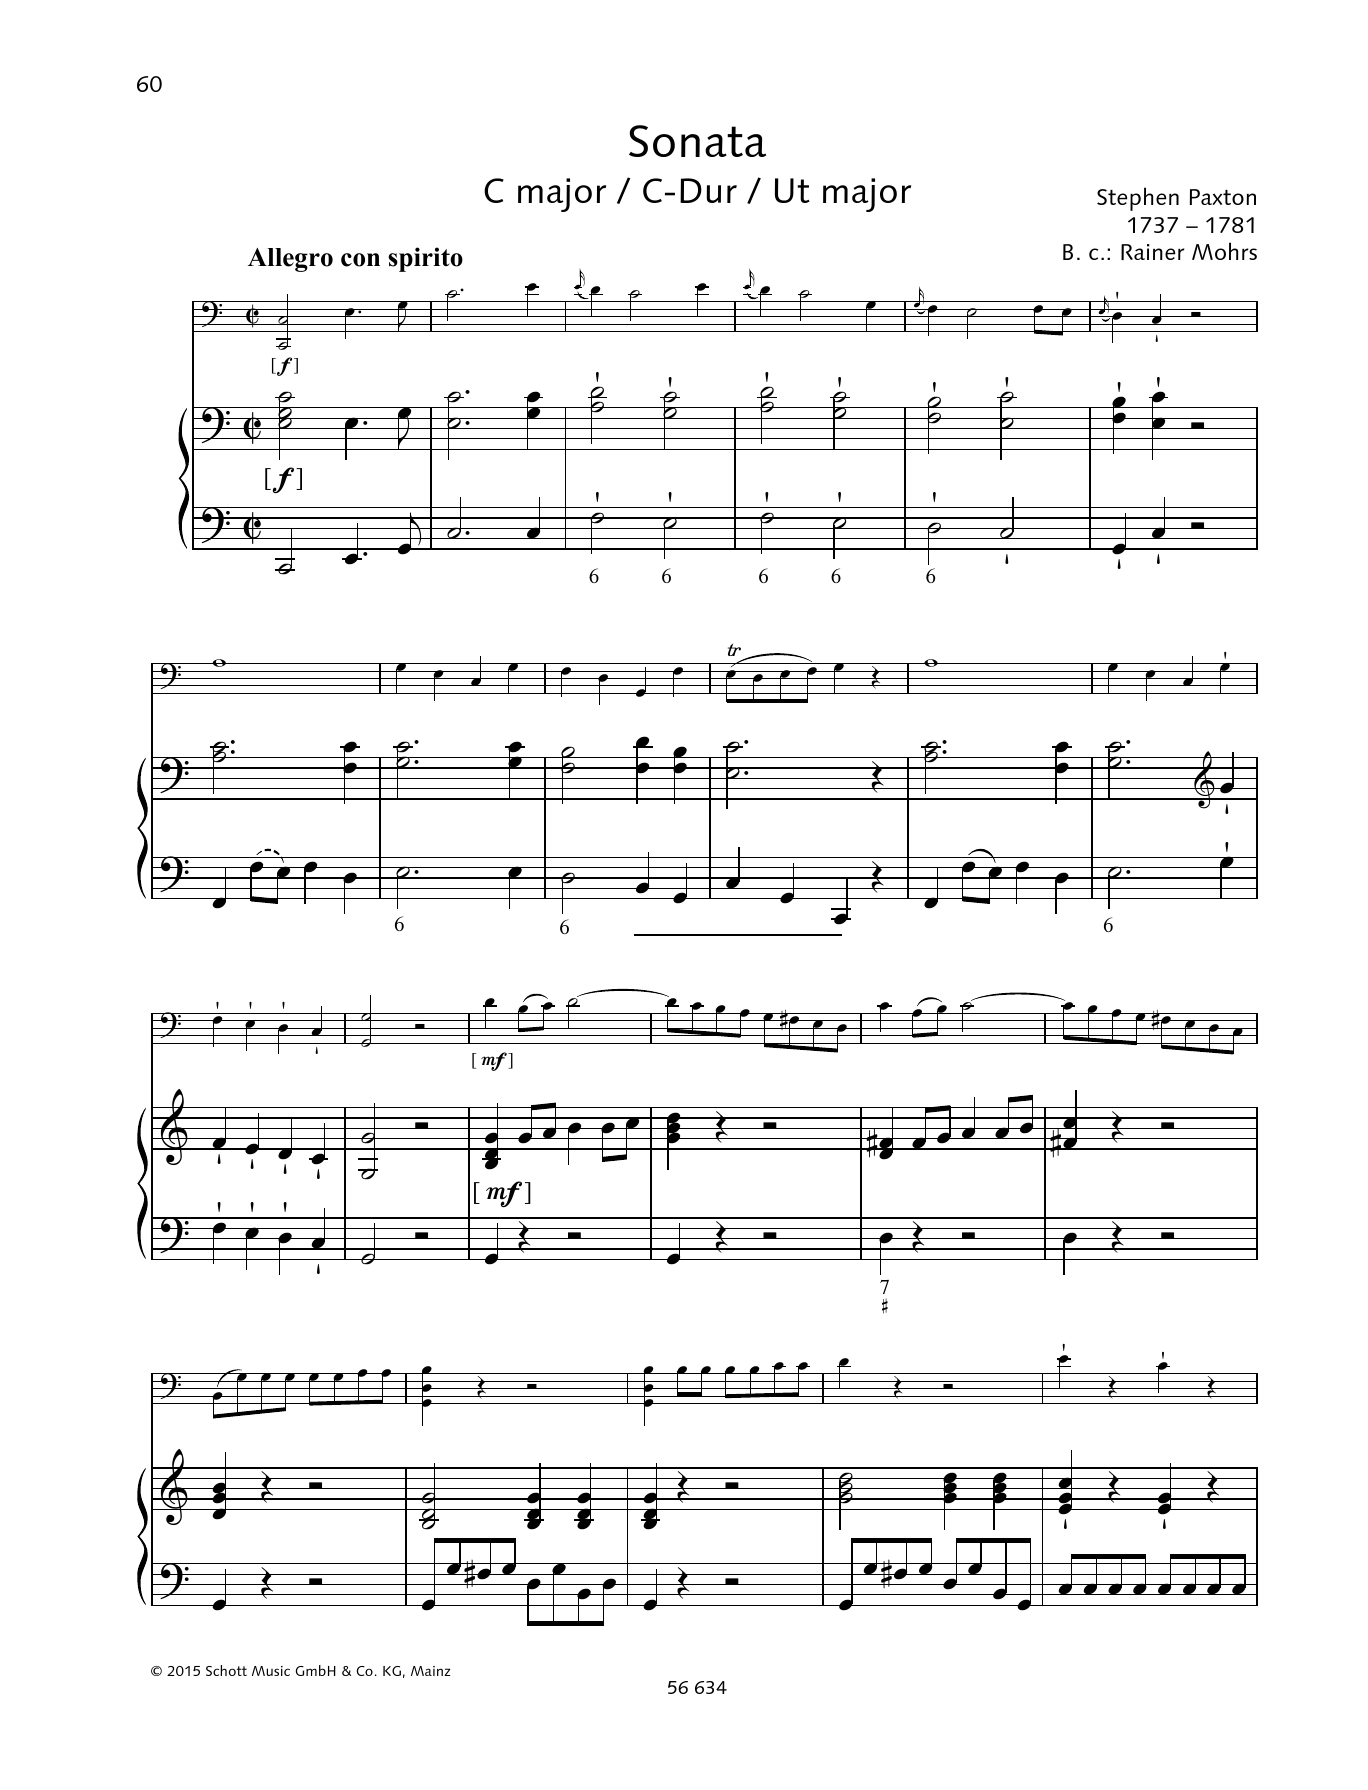 Baldassare Galuppi Sonata C Major Sheet Music Notes & Chords for Piano Duet - Download or Print PDF